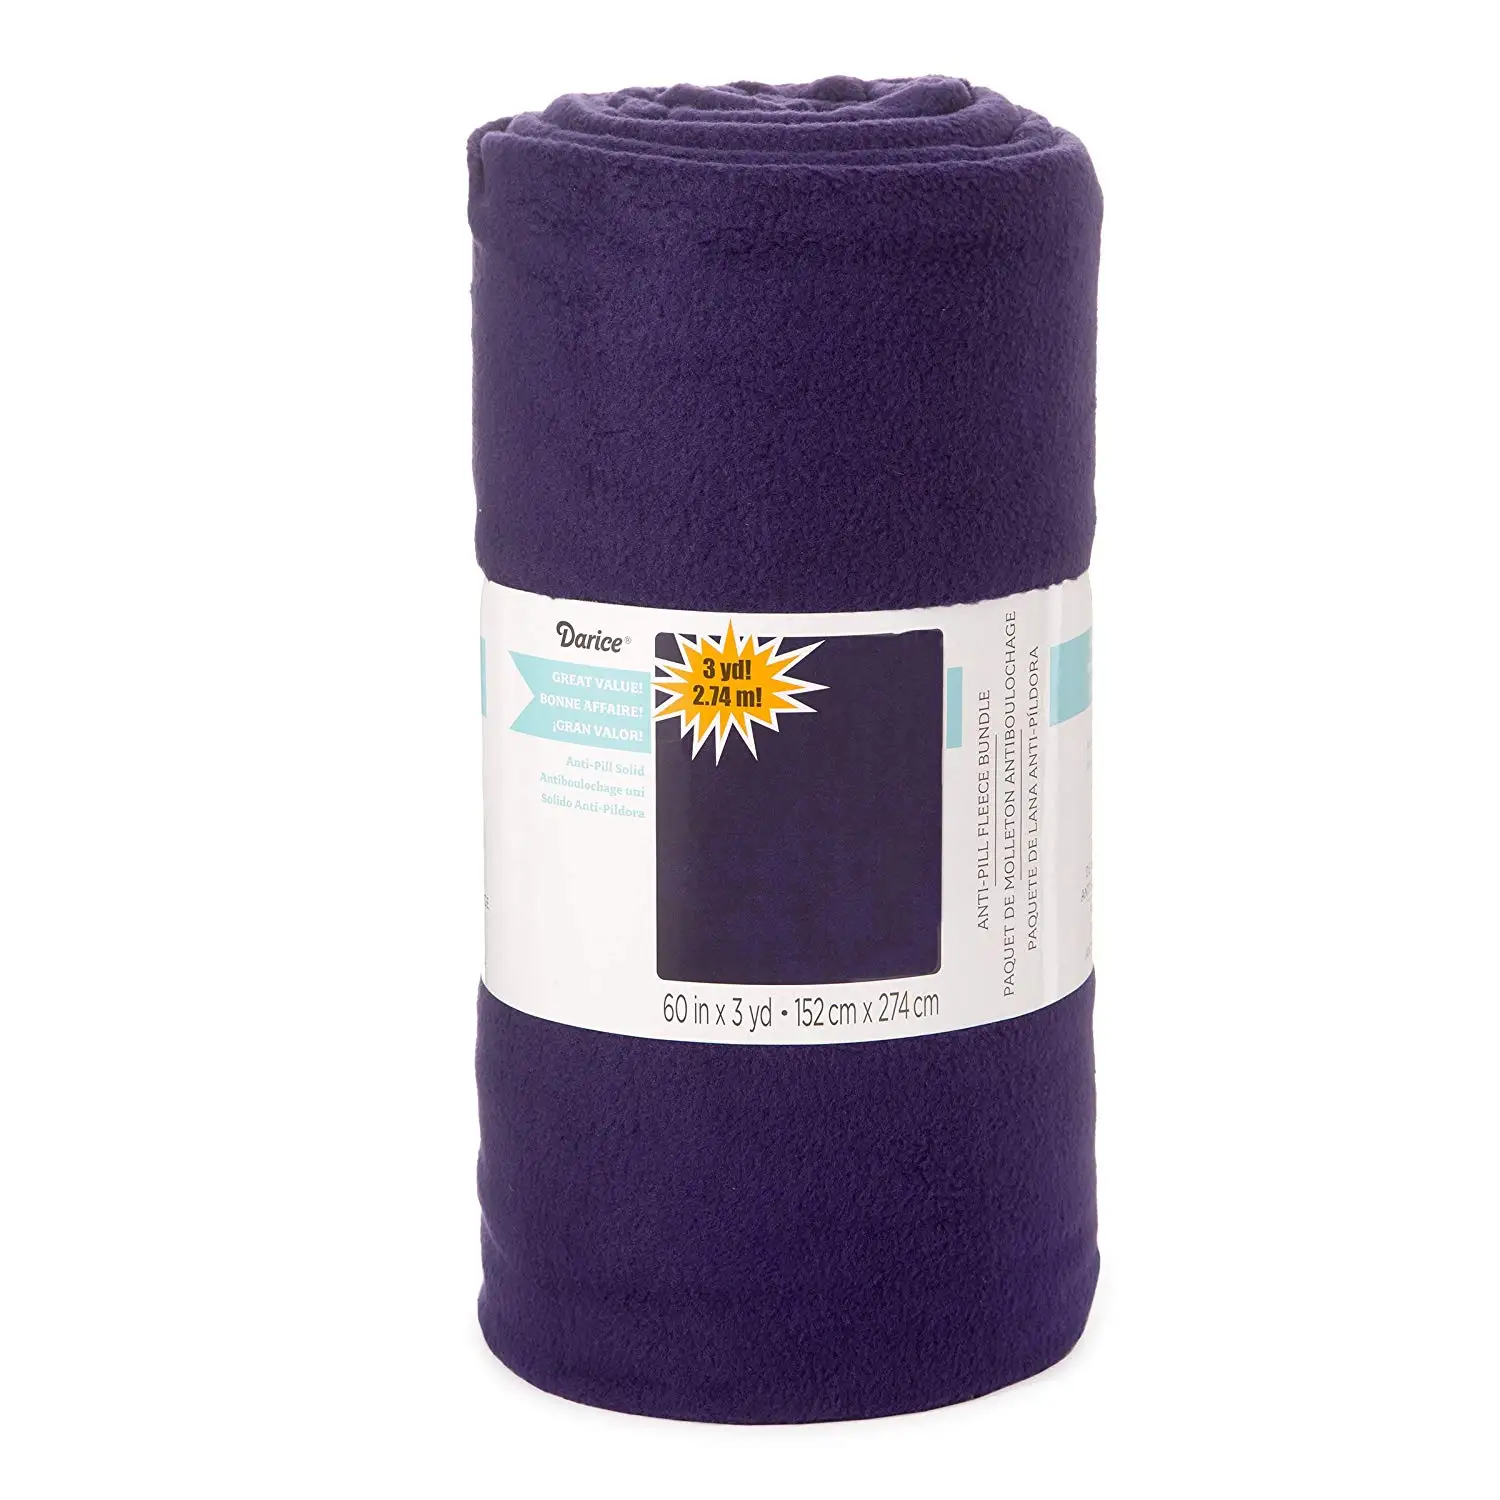 Darice Bright Tie Dye Print Anti-Pill Fleece Fabric Roll